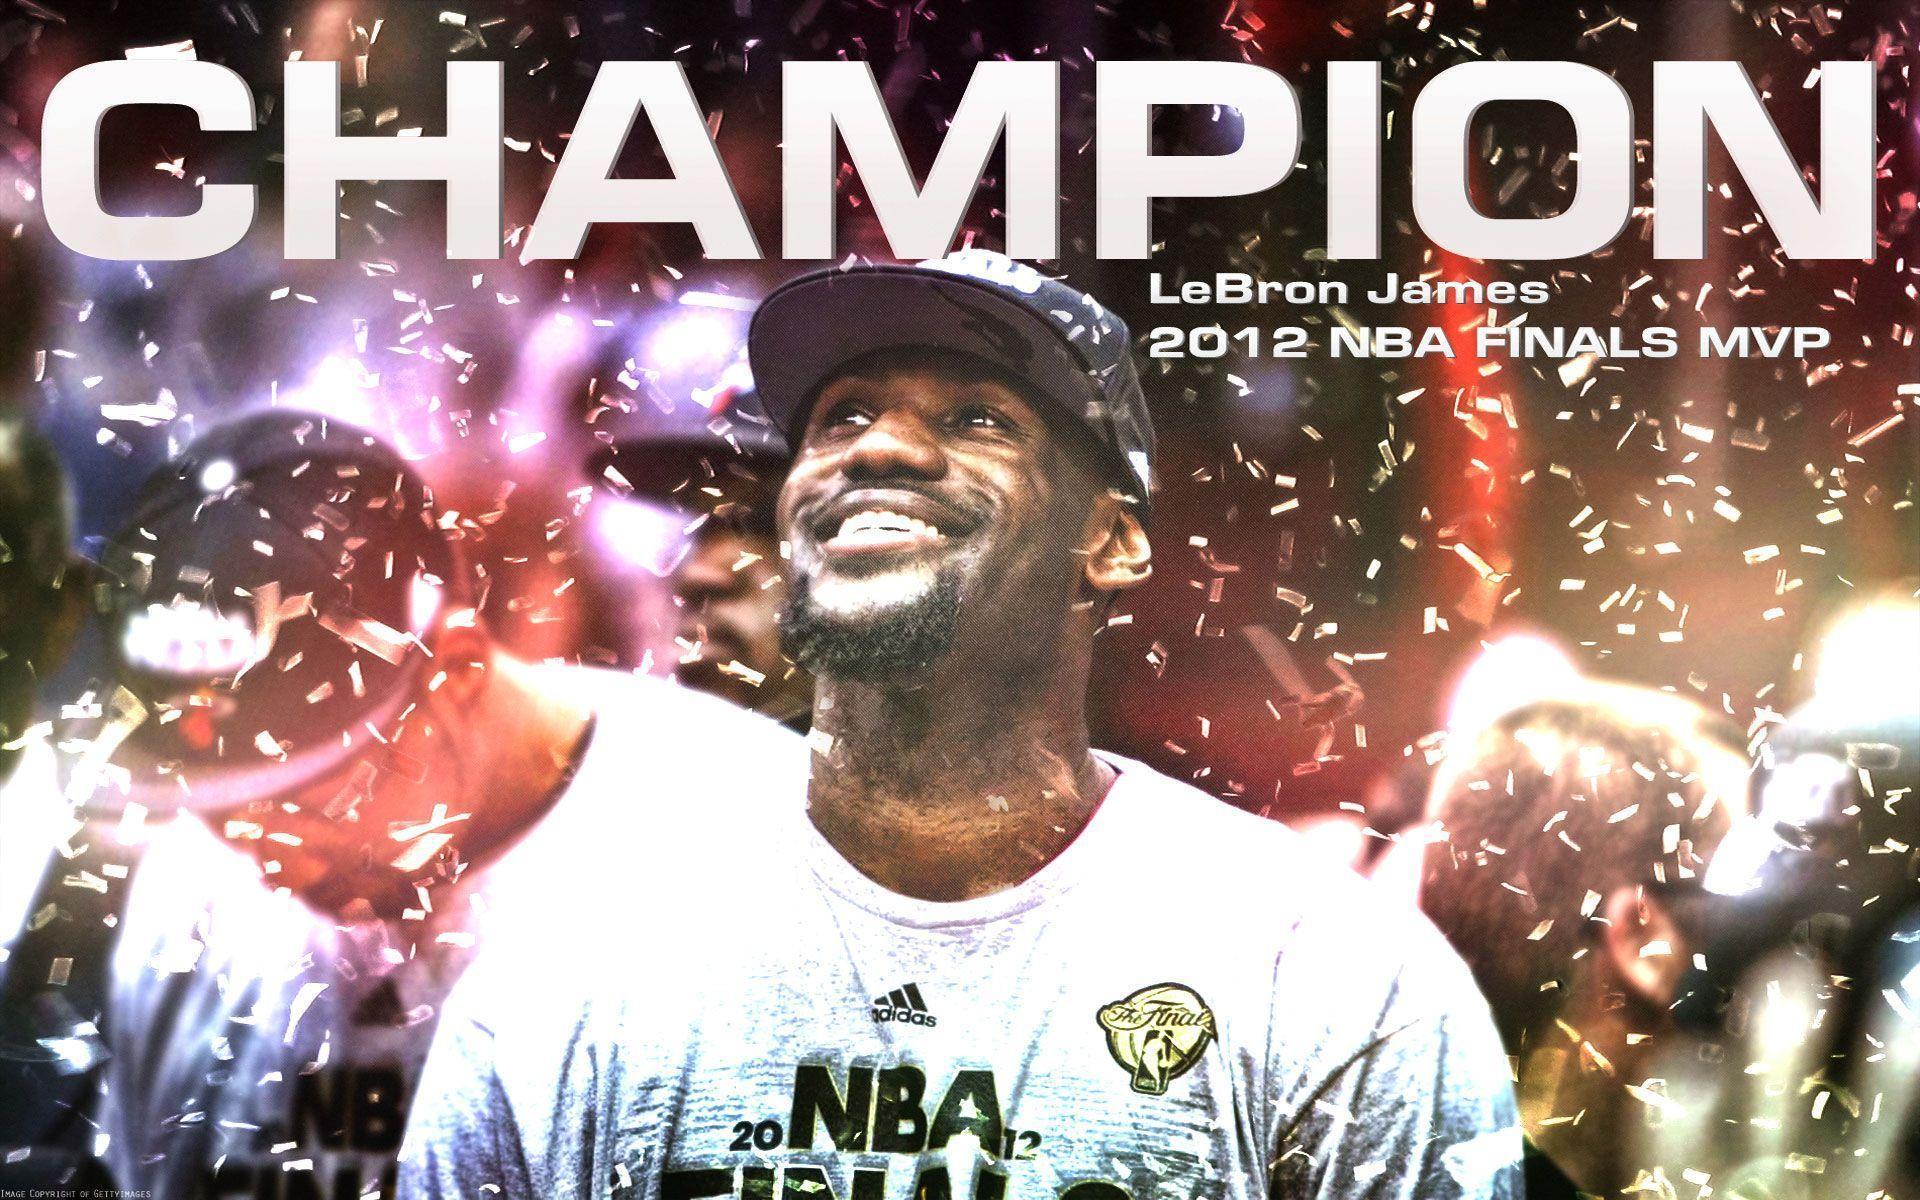 LeBron James 2012 NBA Finals MVP 1920×1200 Wallpaper. Basketball